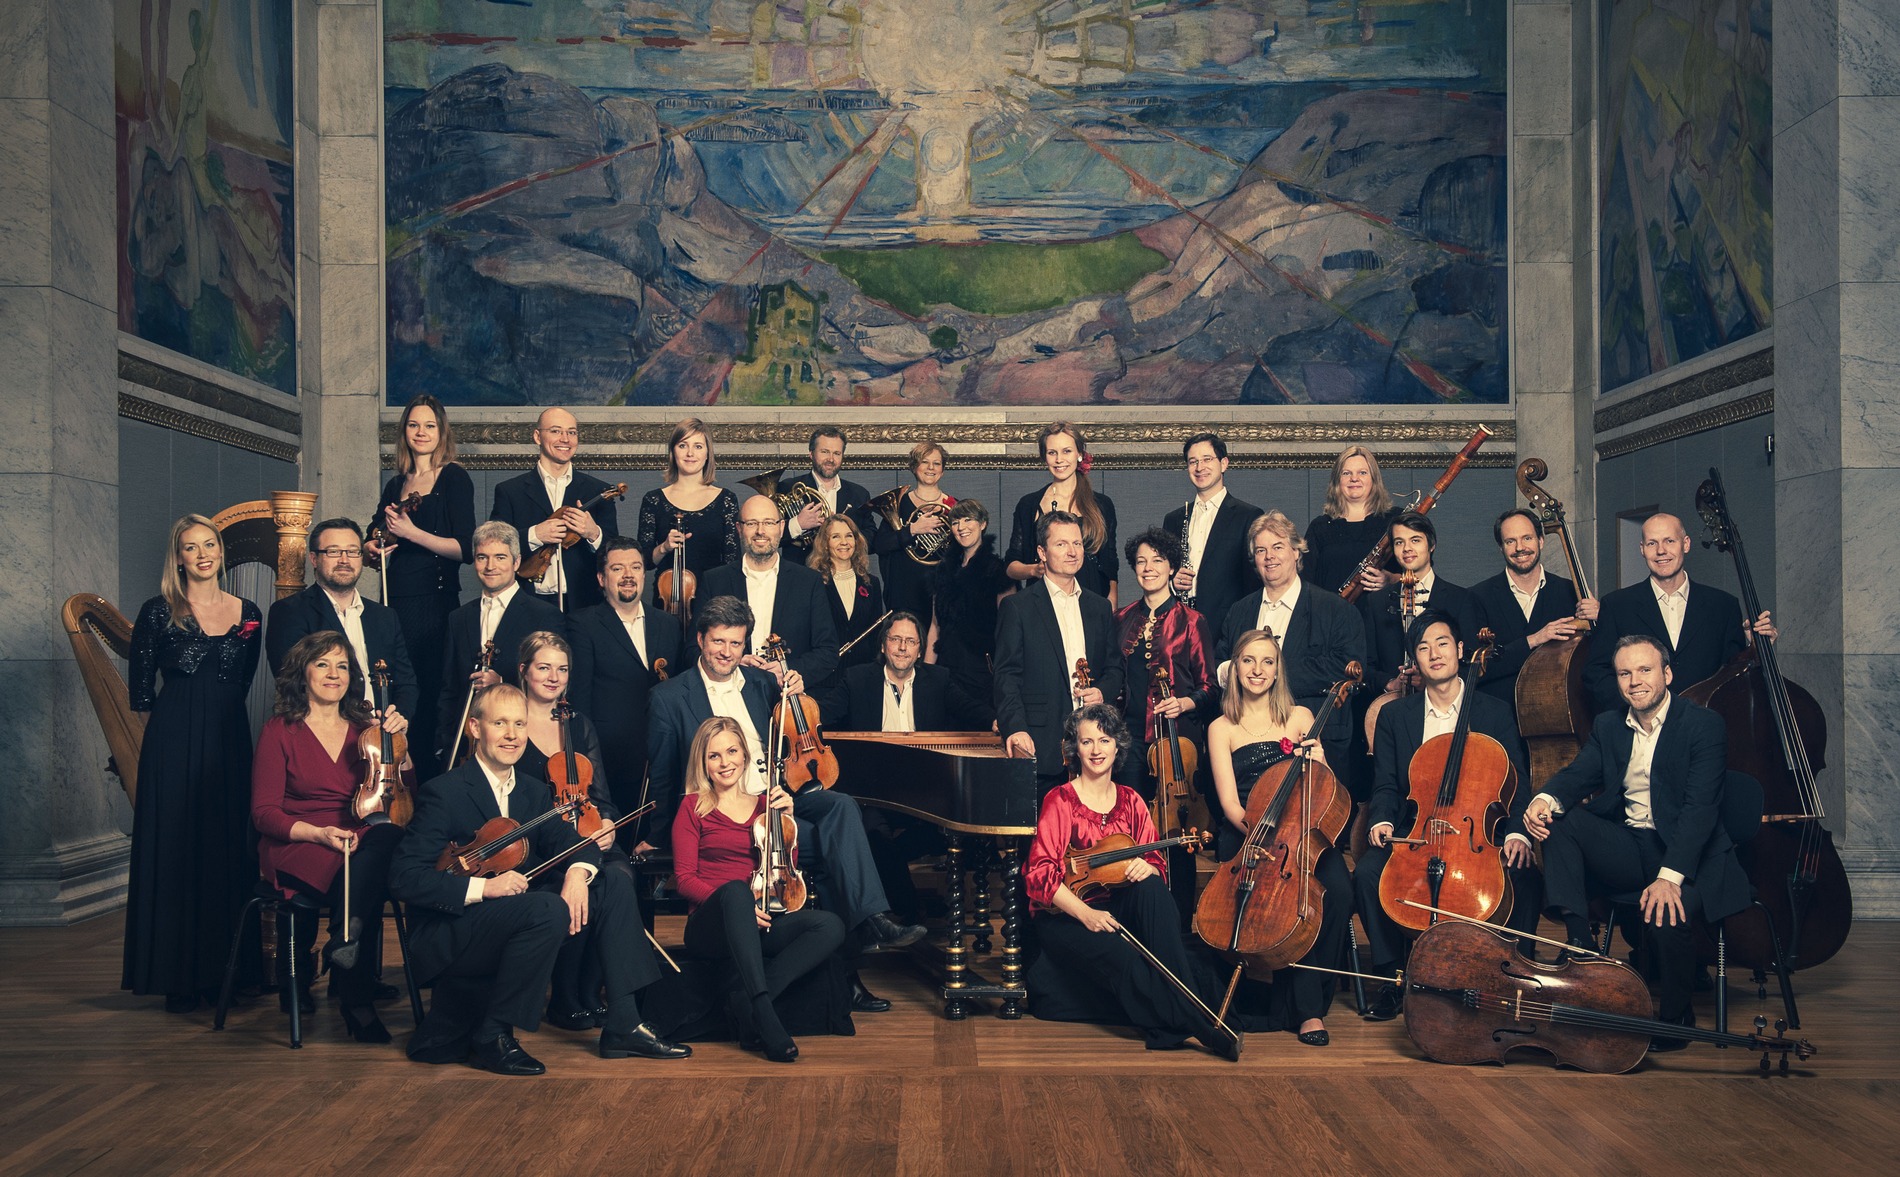 Norwegian Chamber Orchestra, fot. Mona Ødegård (źródło: materiały prasowe organizatora)